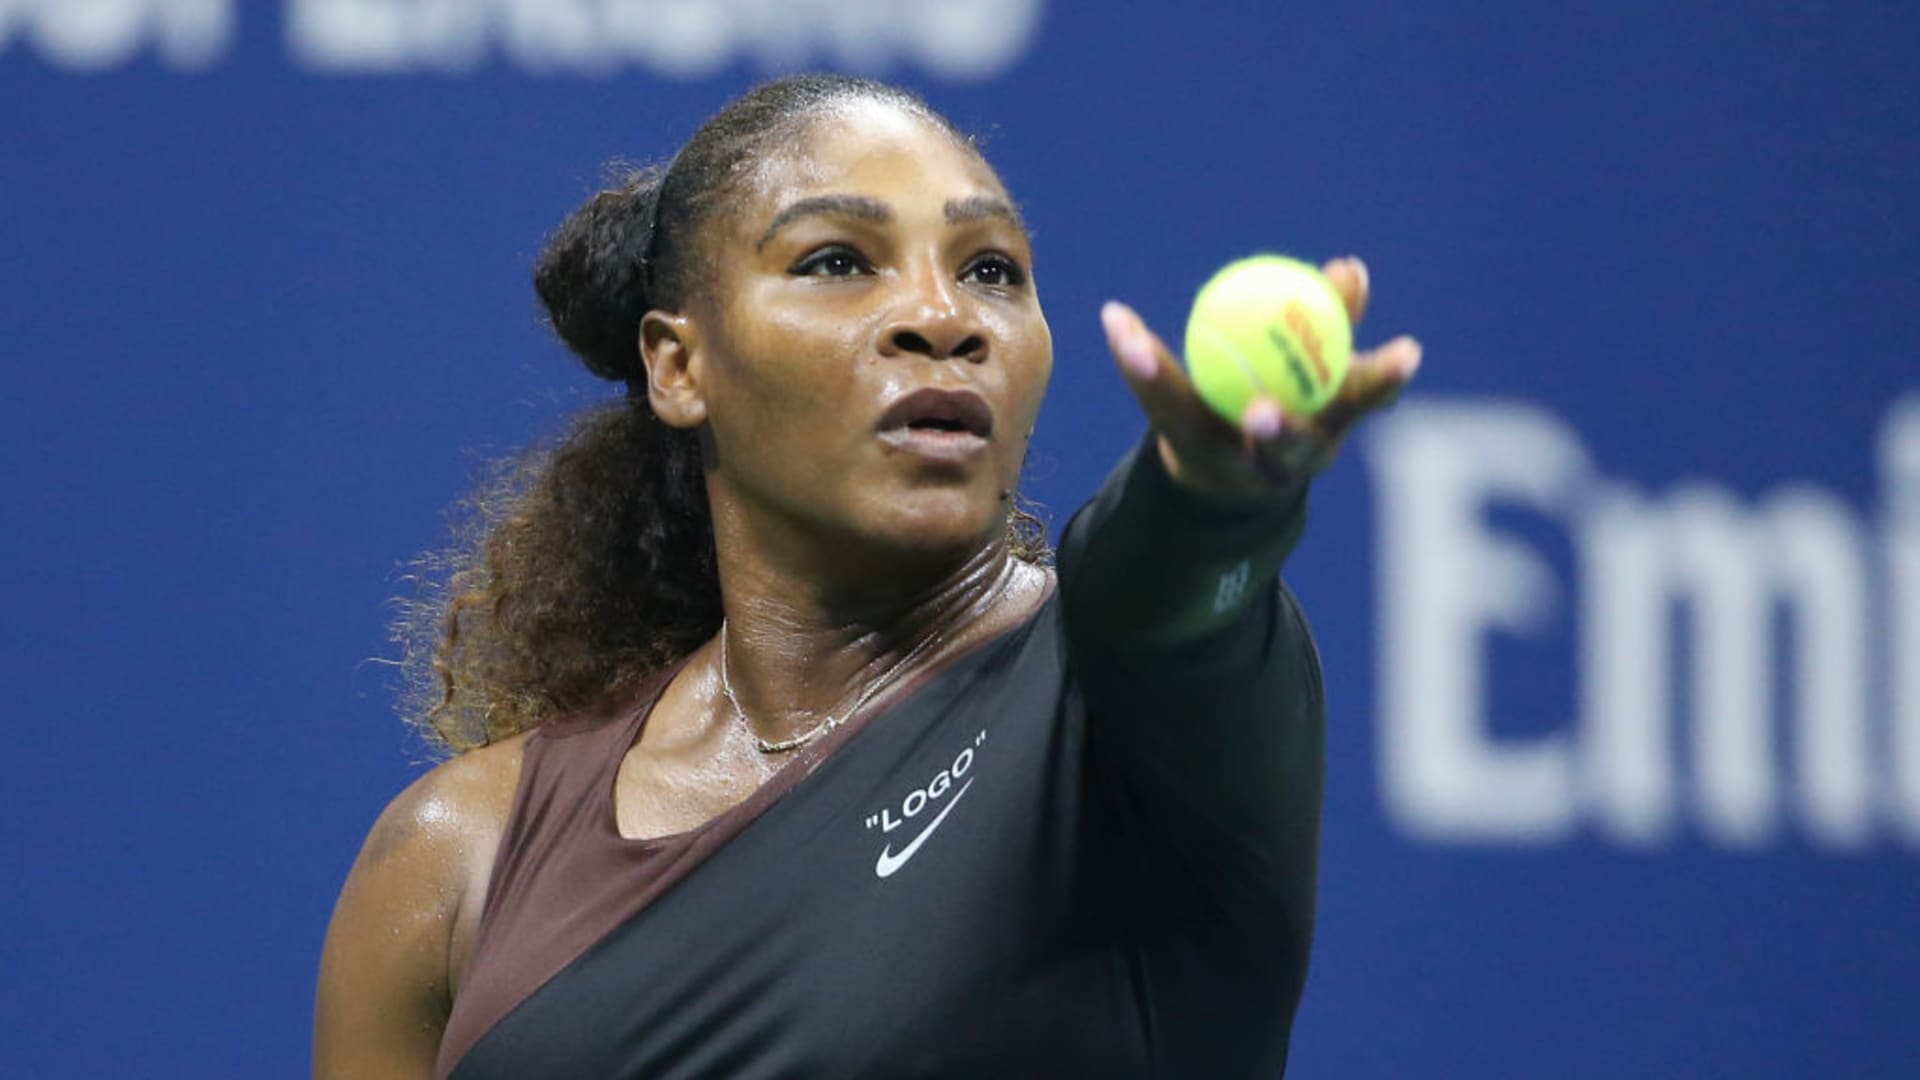 Lesson about success serena williams nikes in Serena Williams' Nike ad